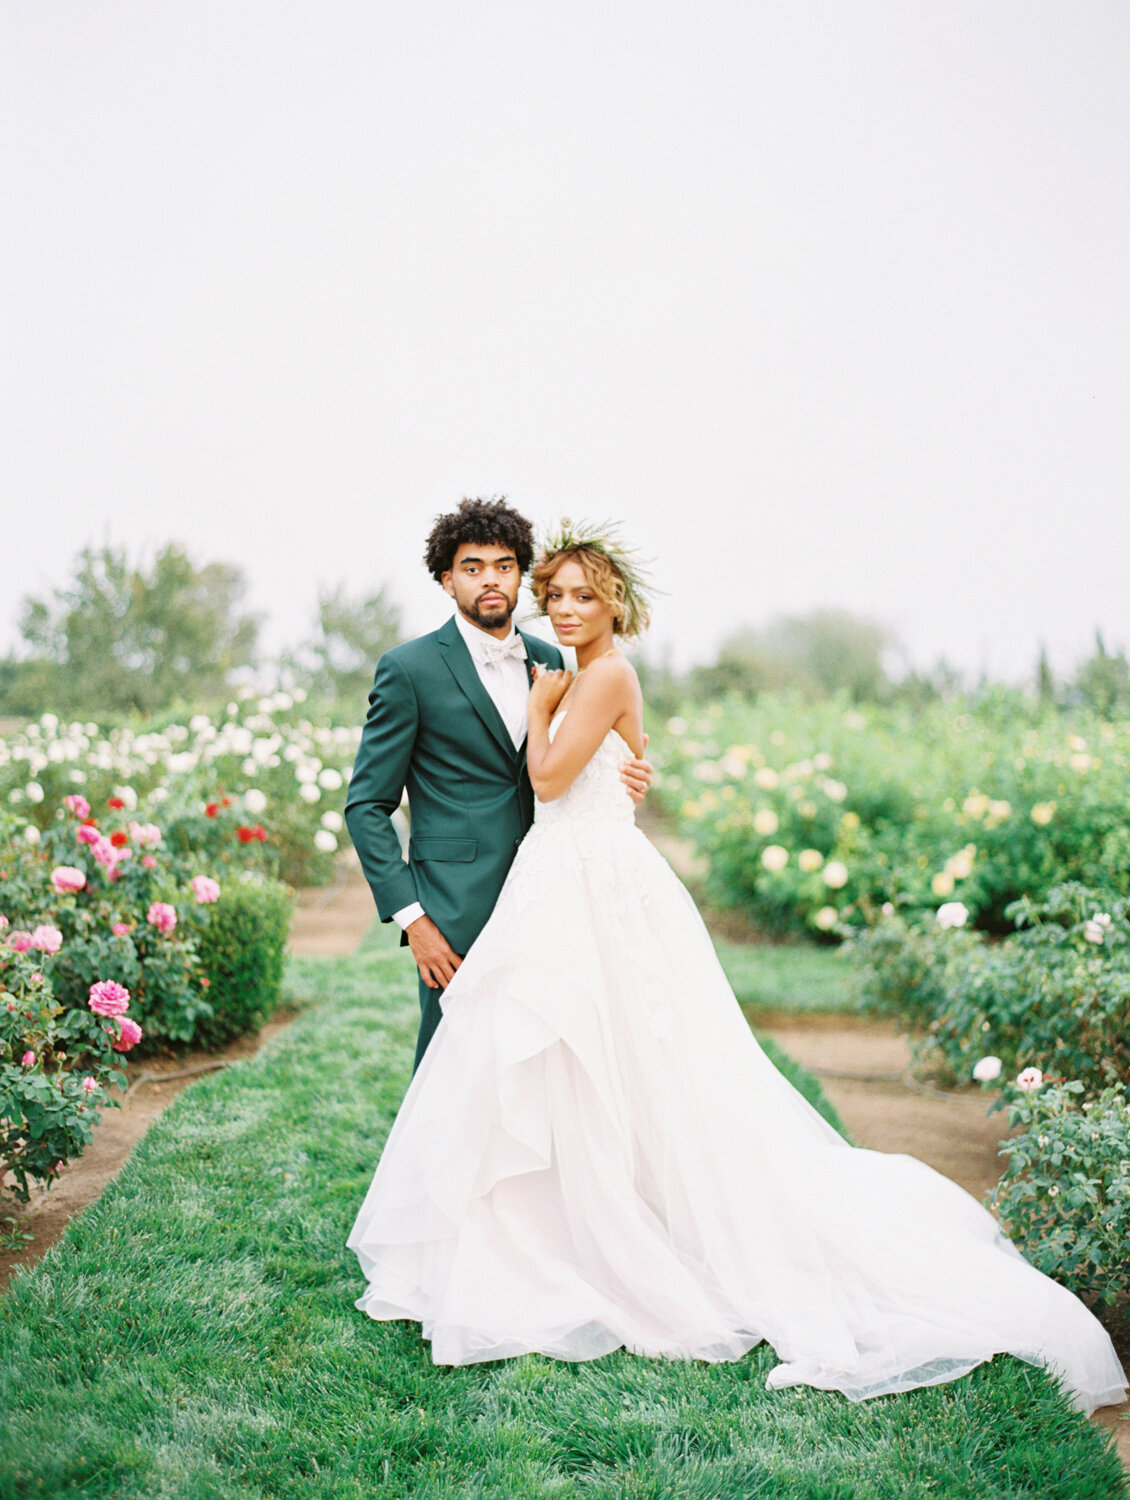 wisteria-photography.com | Wisteria Photography | Intimate Rose Garden Wedding | Santa Ynez | Featured on Green Wedding Shoes | Southern California Photographer-40.jpg